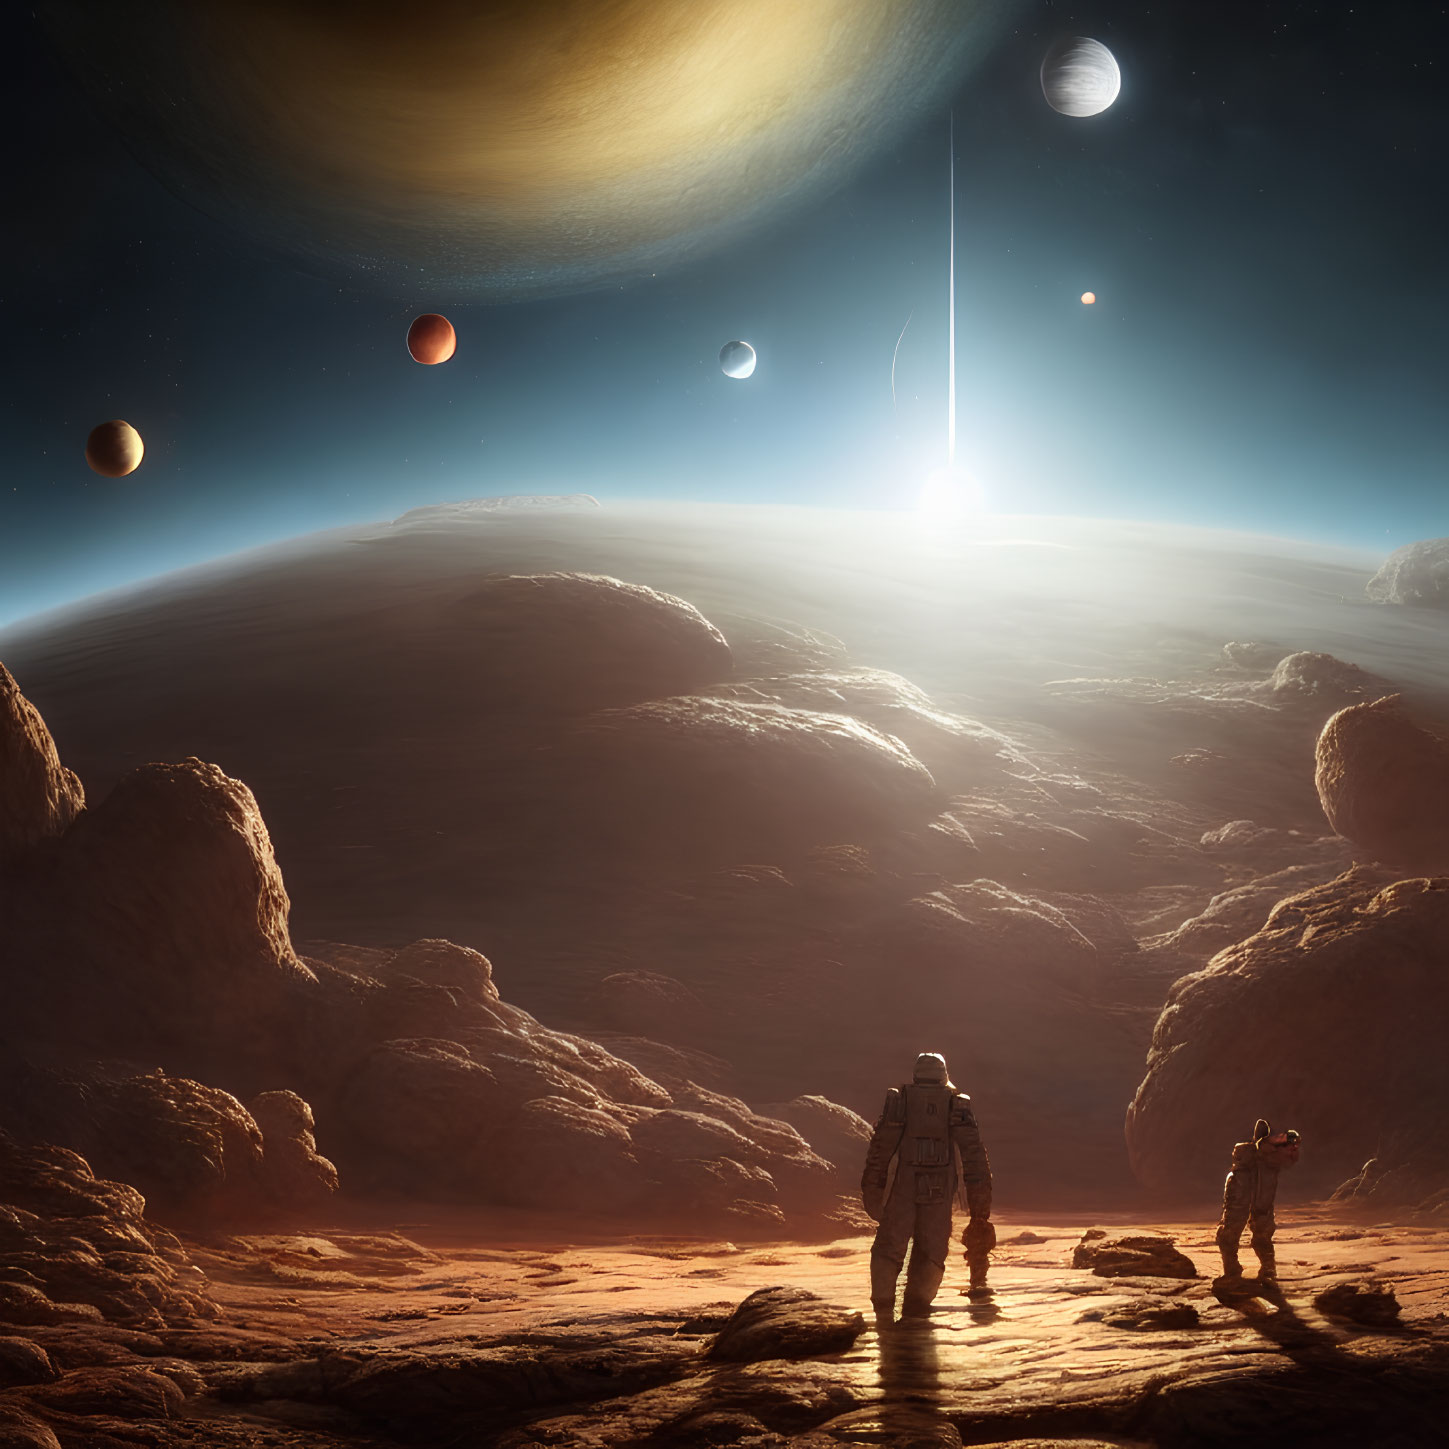 Astronauts on rocky alien planet admire vast space vista